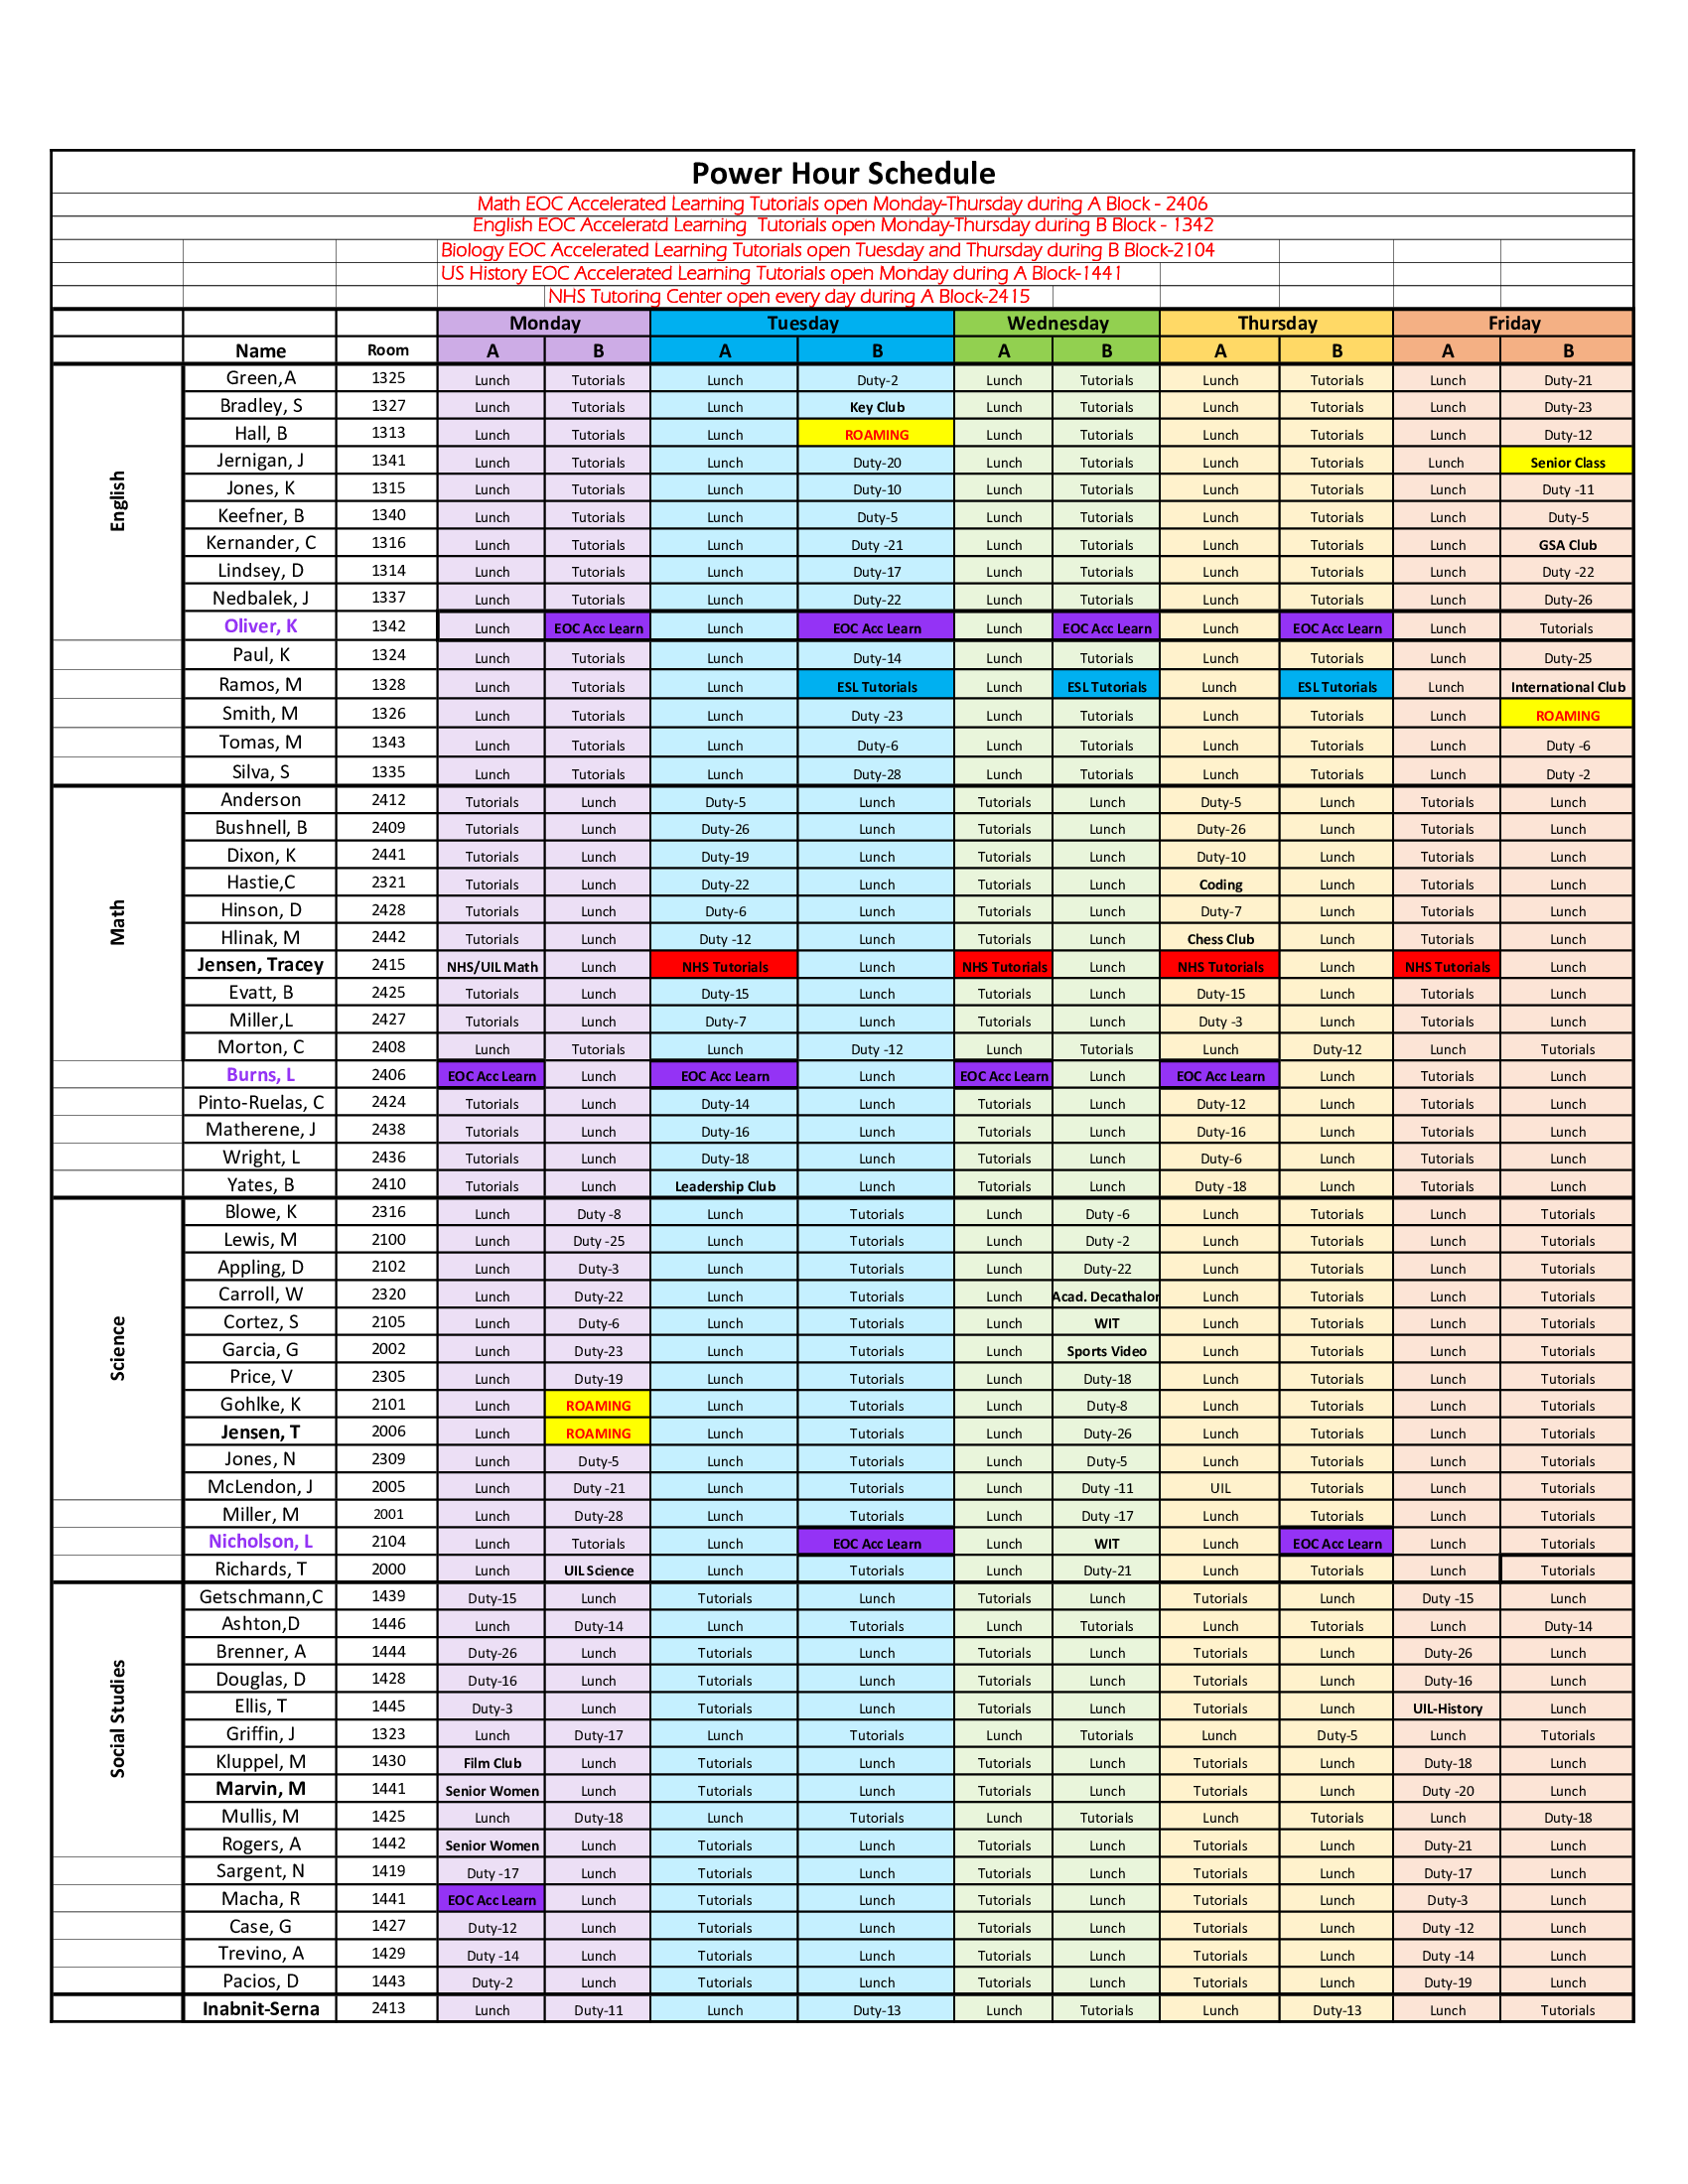 Power Hour teacher schedule 21-22  revised 8_17_21 (2) 1 of 3